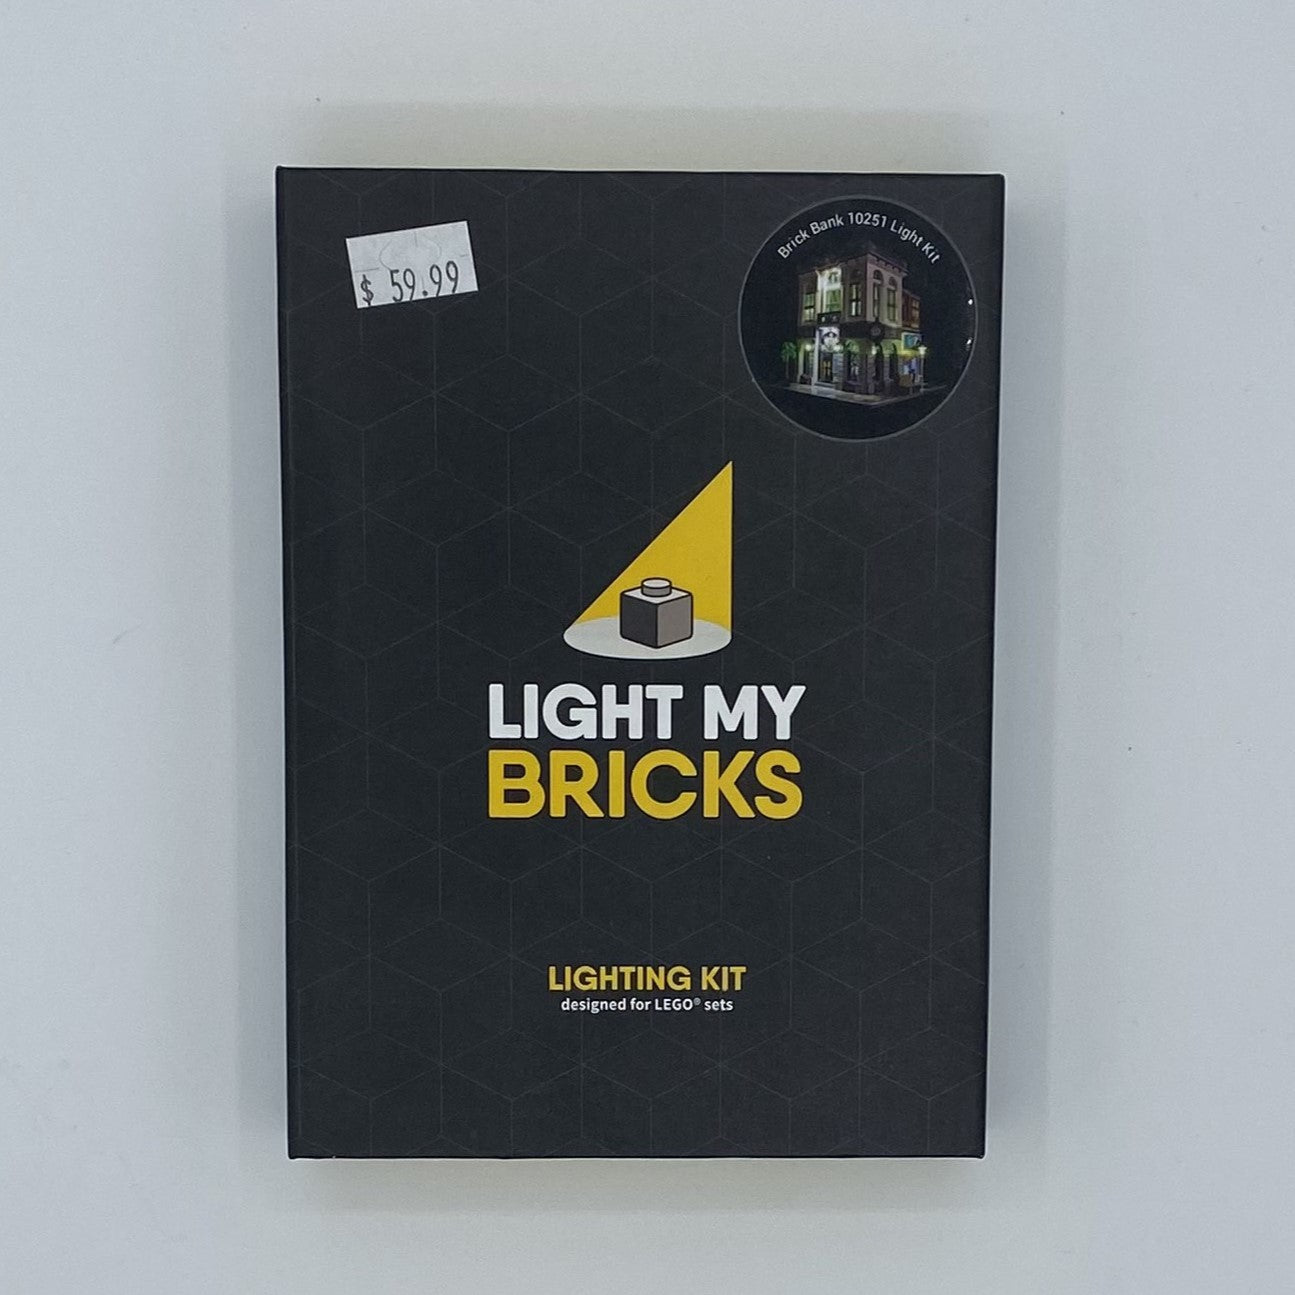 LMB Brick Bank (10251) Lighting Kit